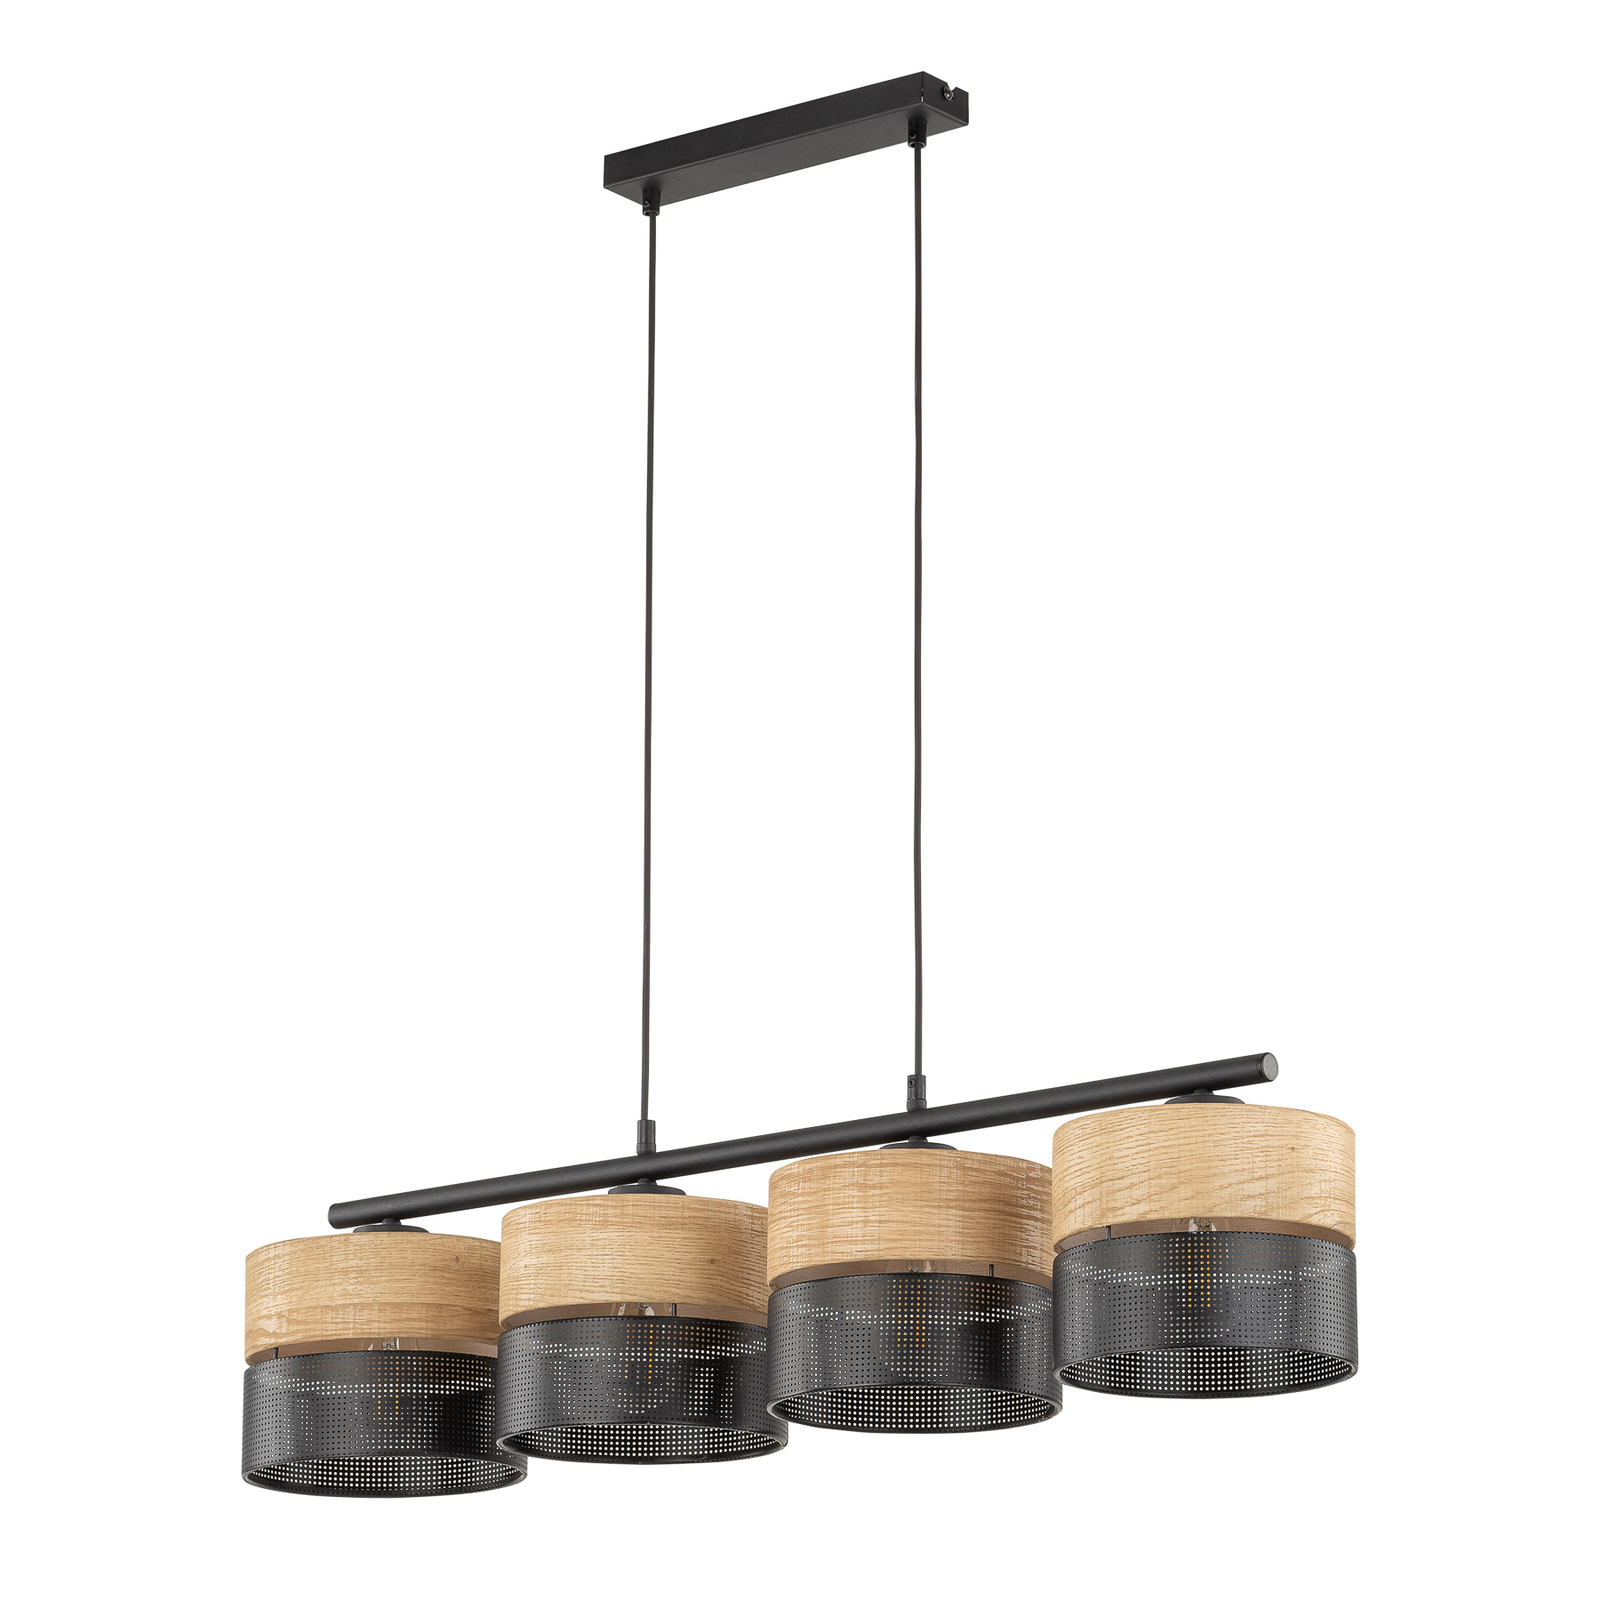 Nicol hanging light, black/wood-effect, 94x20 cm 4-bulb, 4 x E27